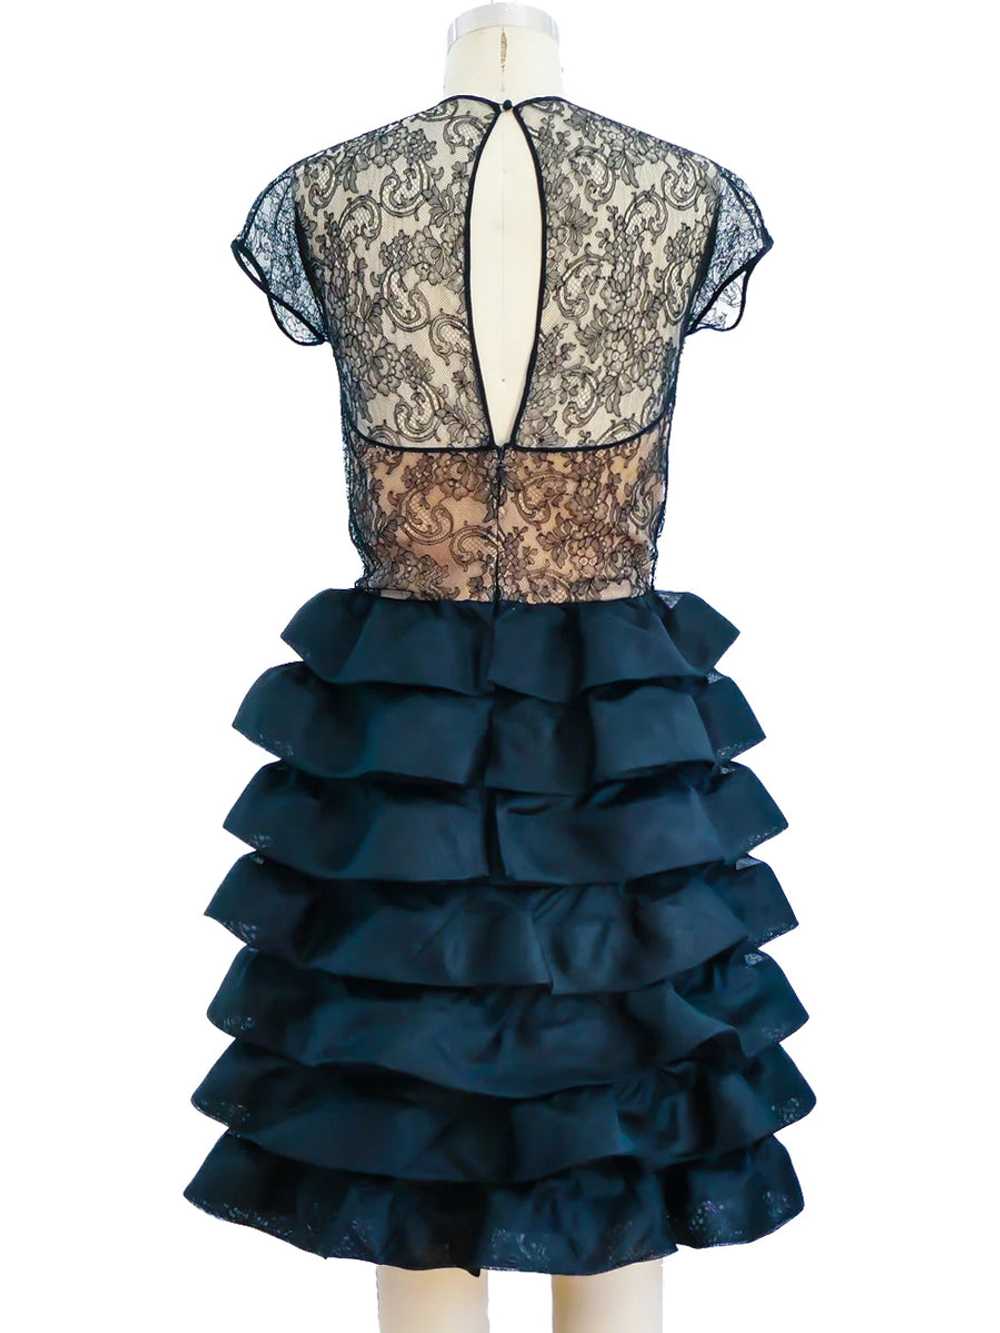 Oscar de la Renta Ruffle Lace Dress - image 5